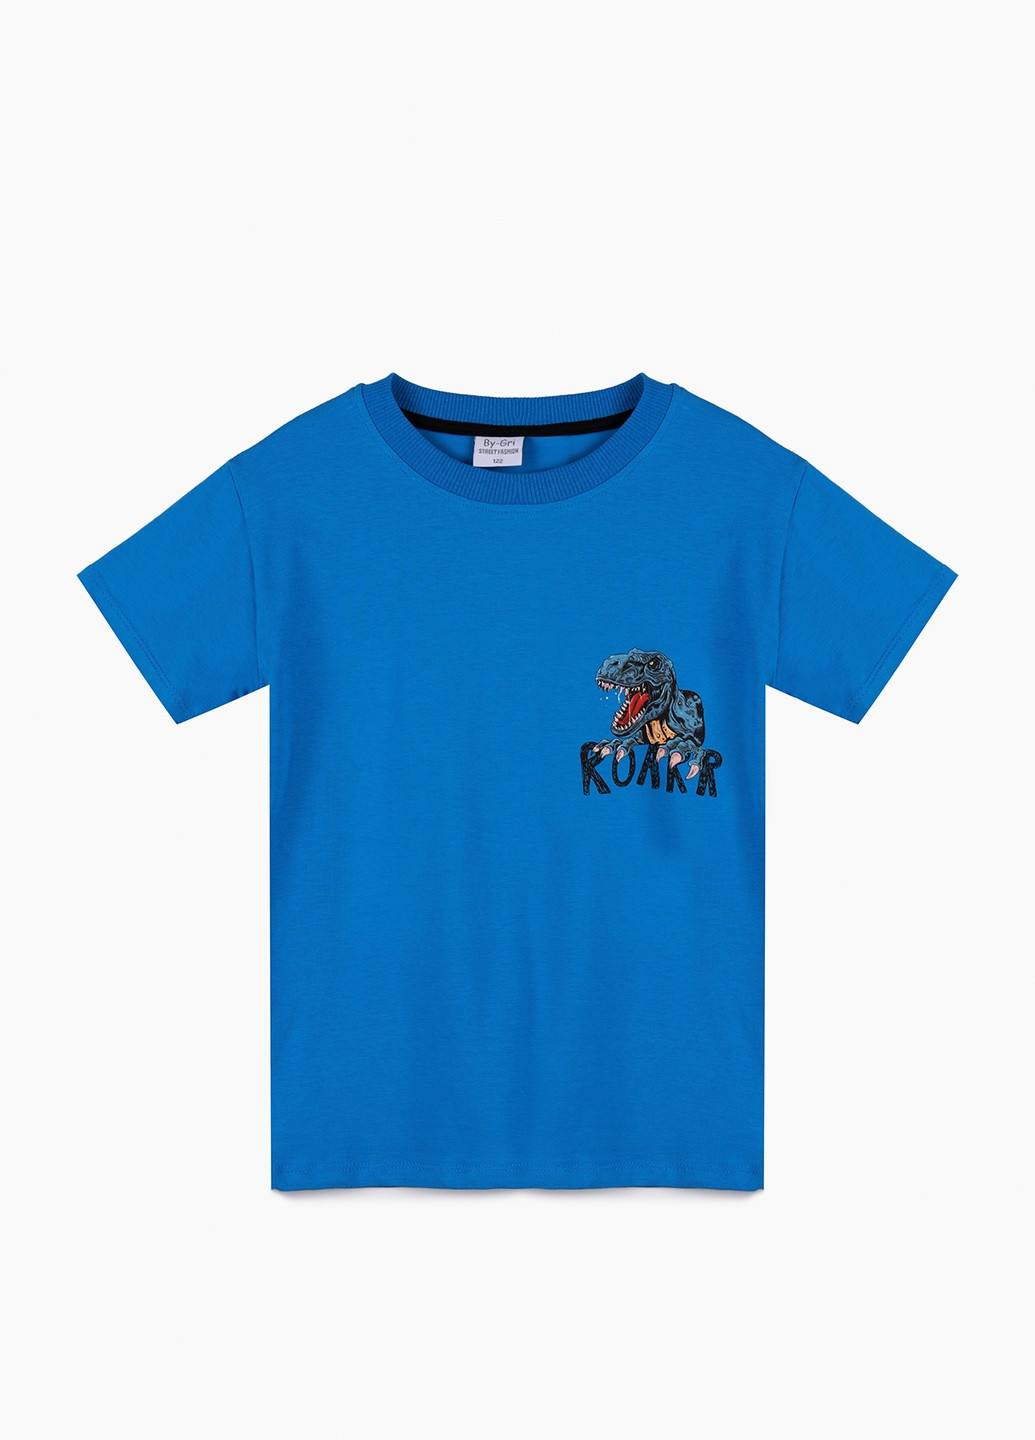 Синий костюм (футболка + шорты) Bay Gree